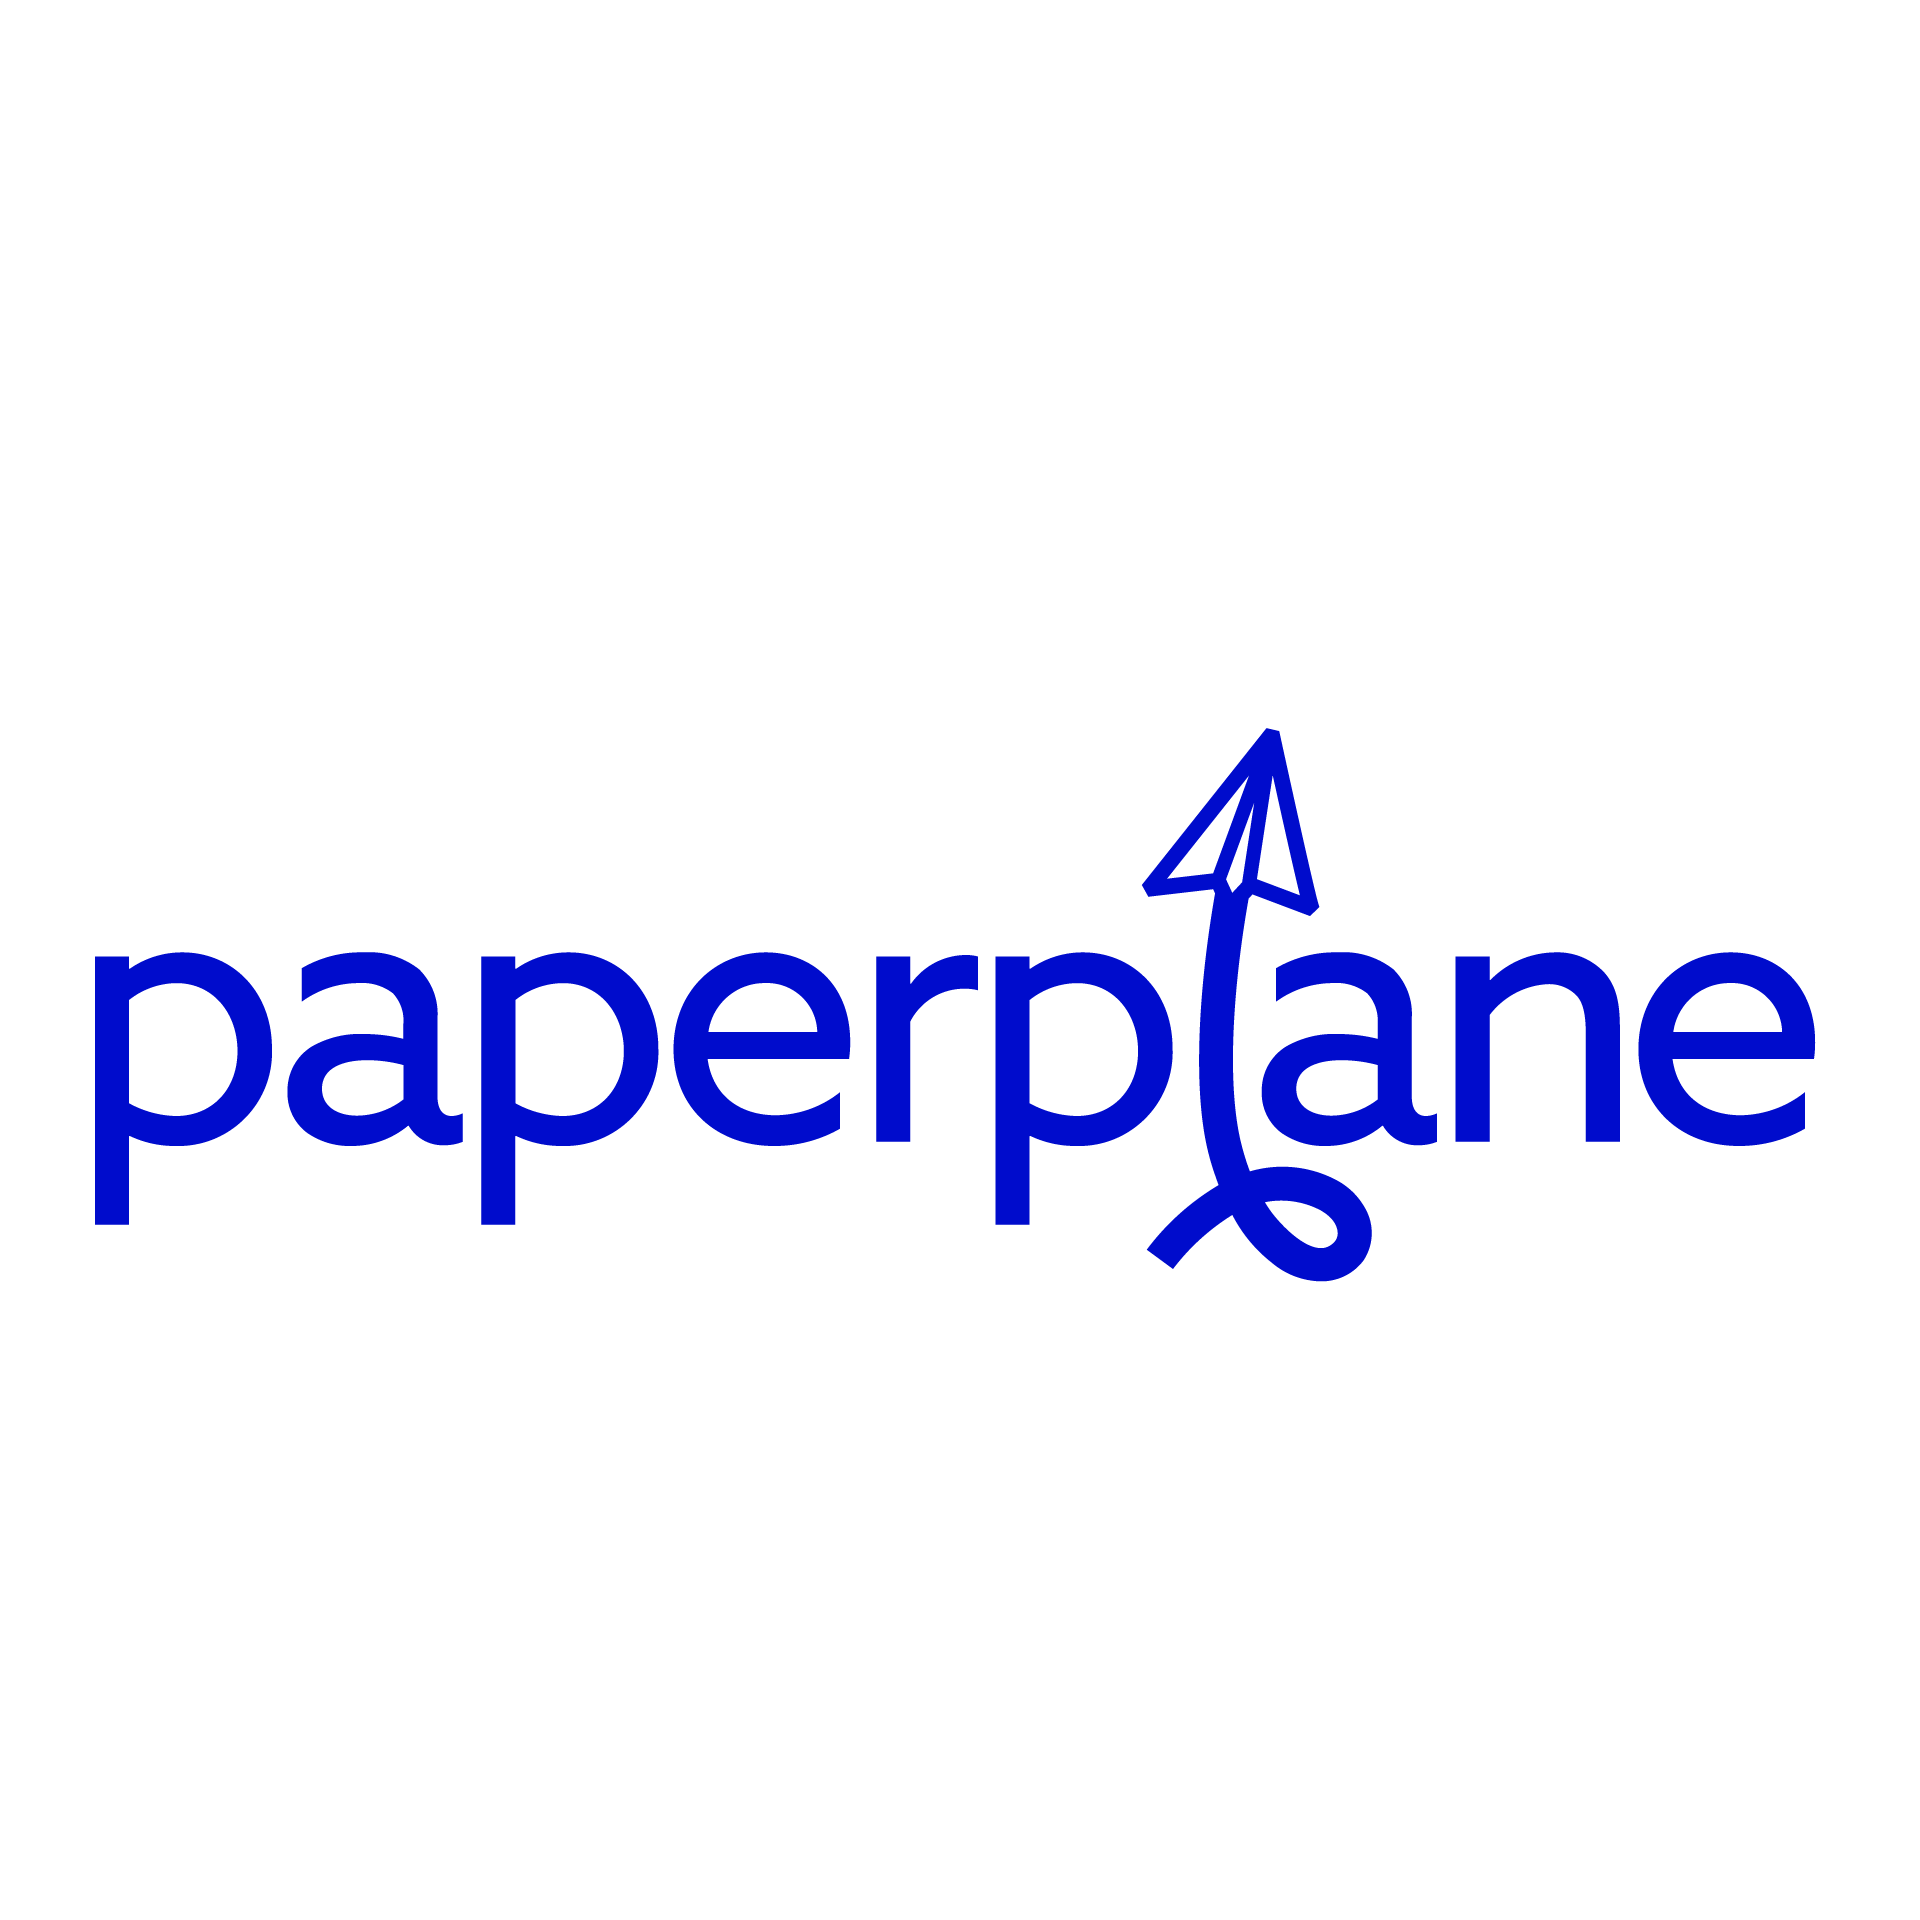 (c) Paperplanefactory.com